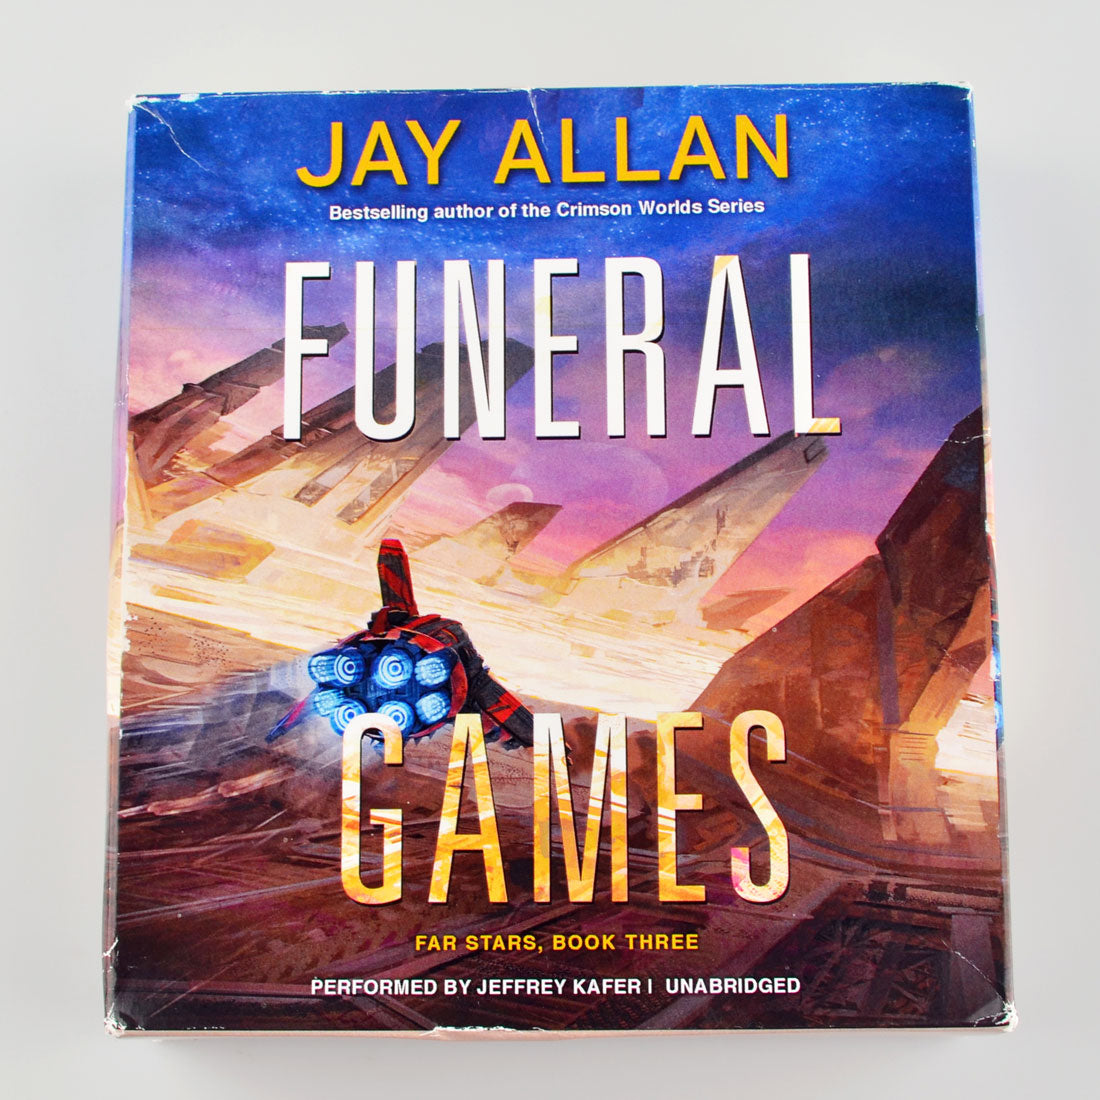 Funeral Games by Jay Allan - Far Stars Book 3 - Sci-Fi - CD Audio Book